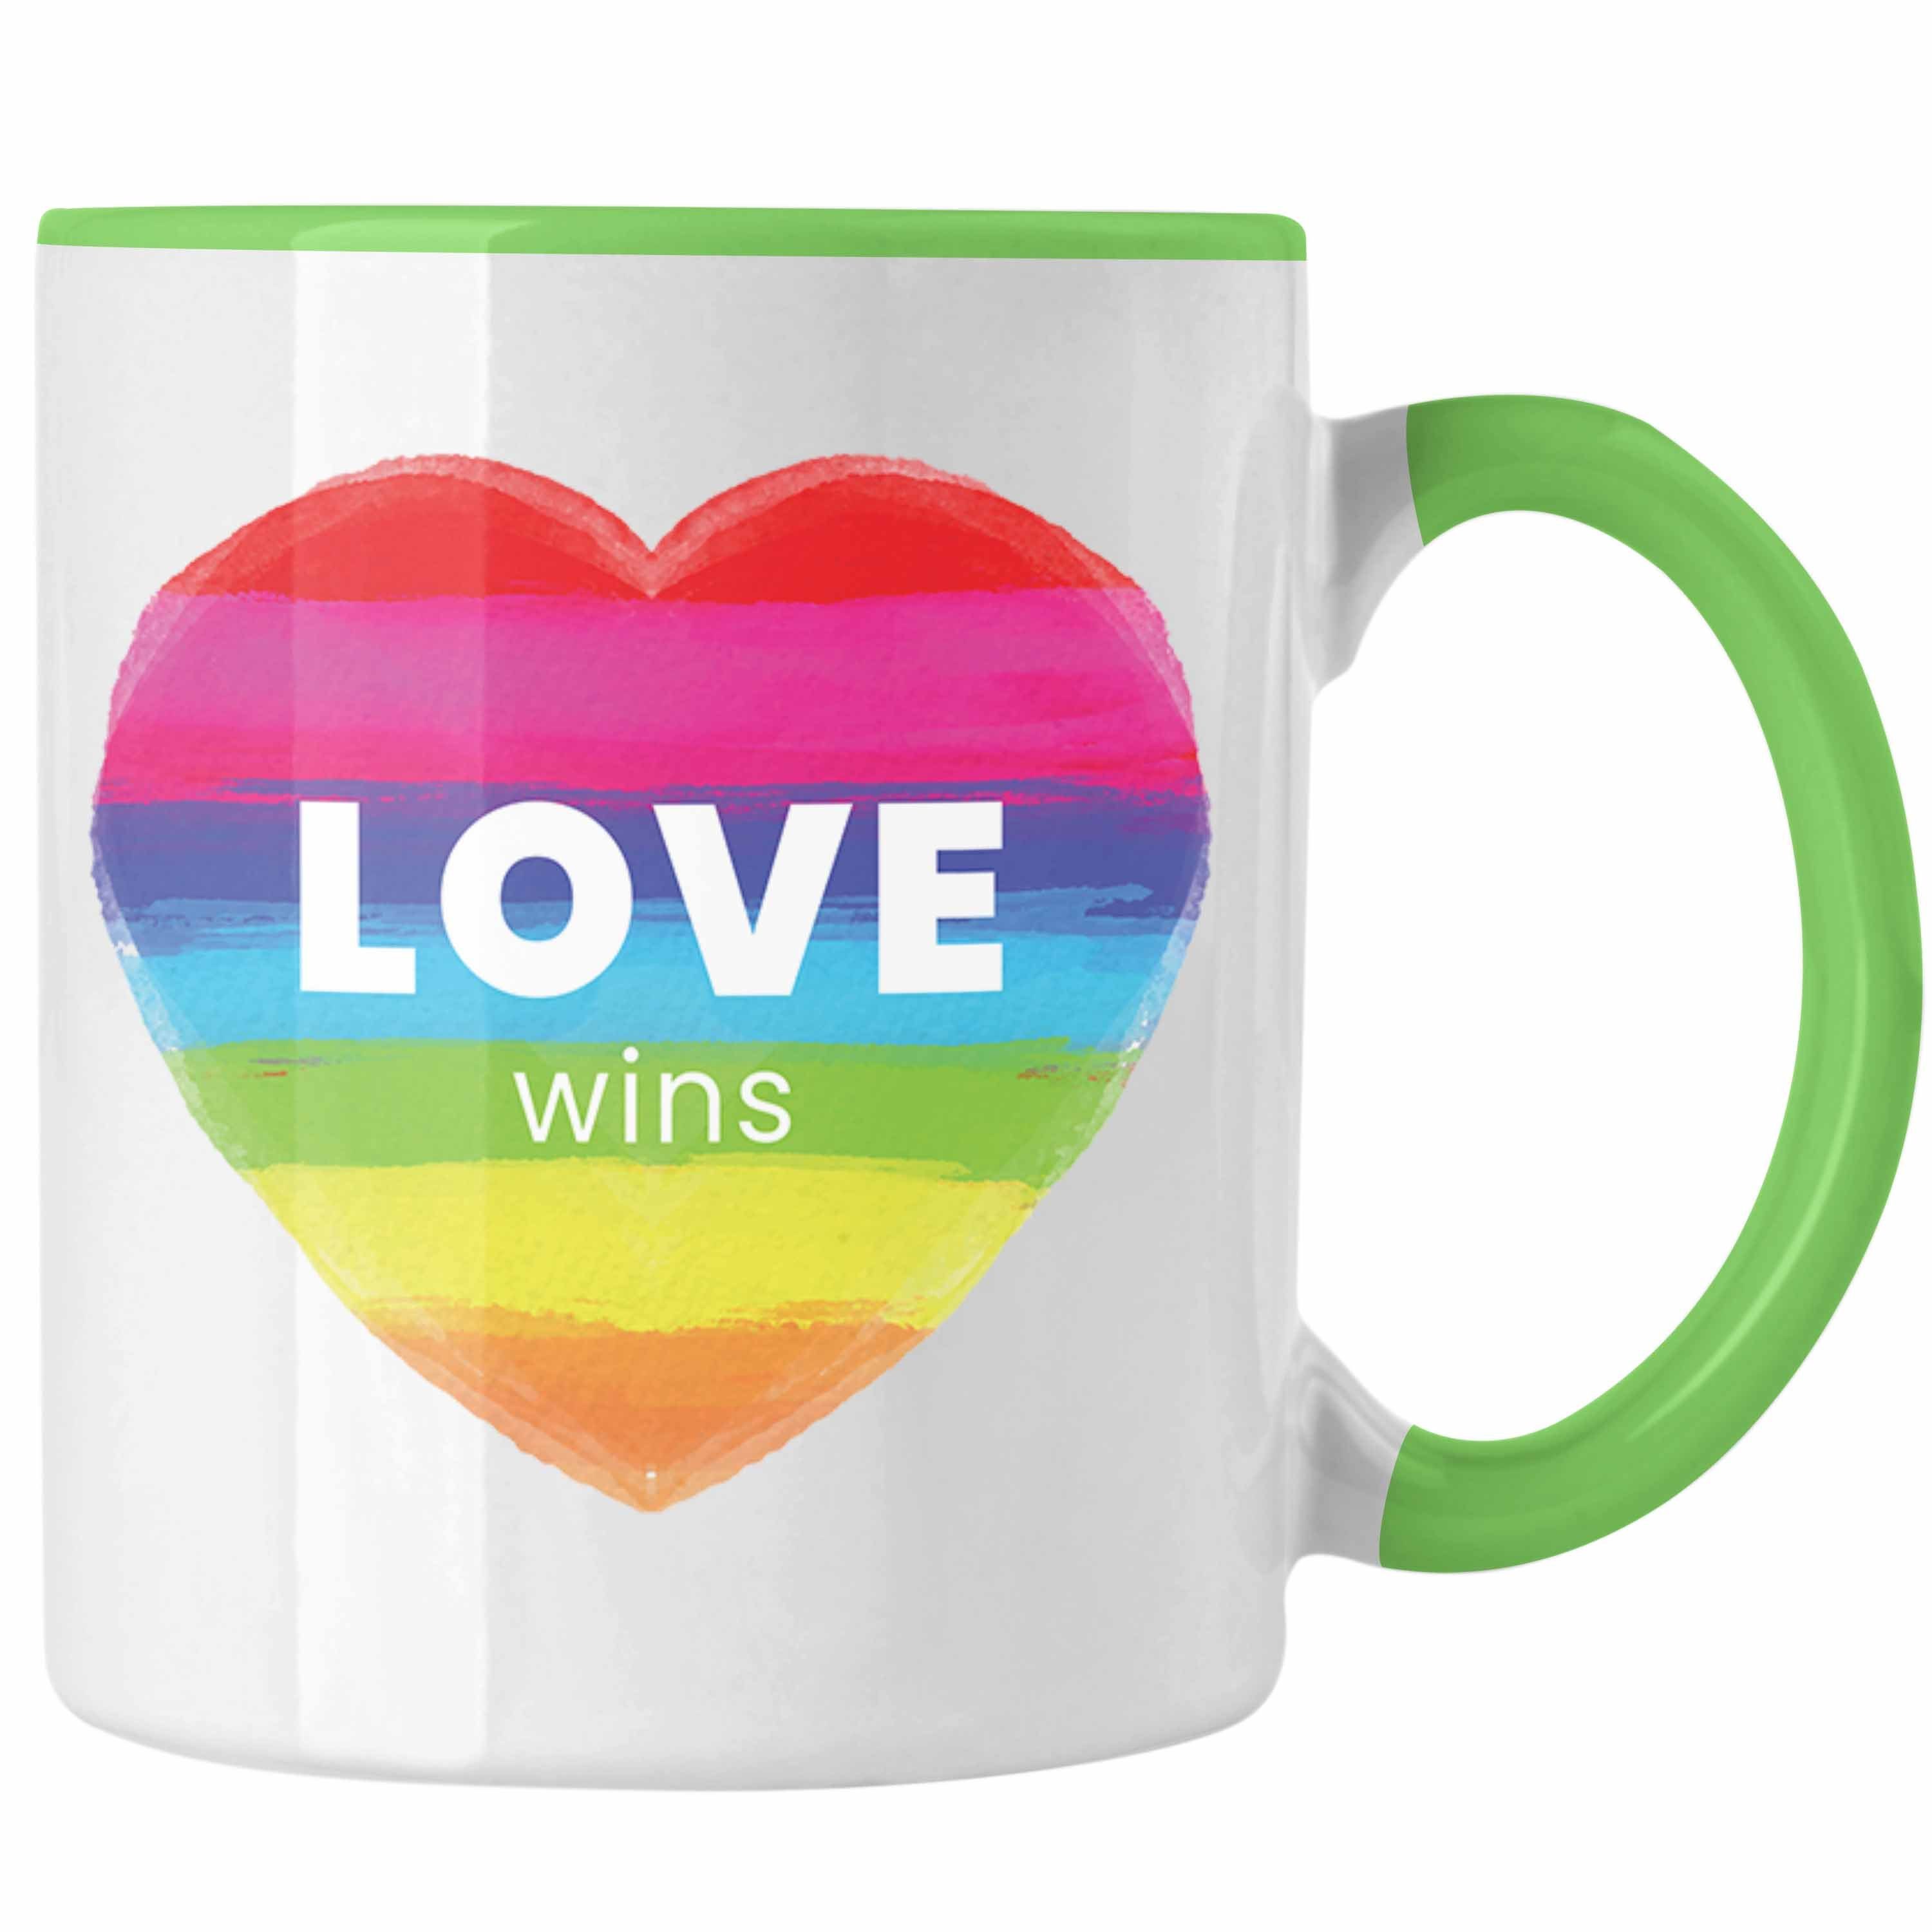 Trendation Tasse Trendation - Regenbogen Tasse Geschenk LGBT Schwule Lesben Transgender Grafik Pride Love Grün